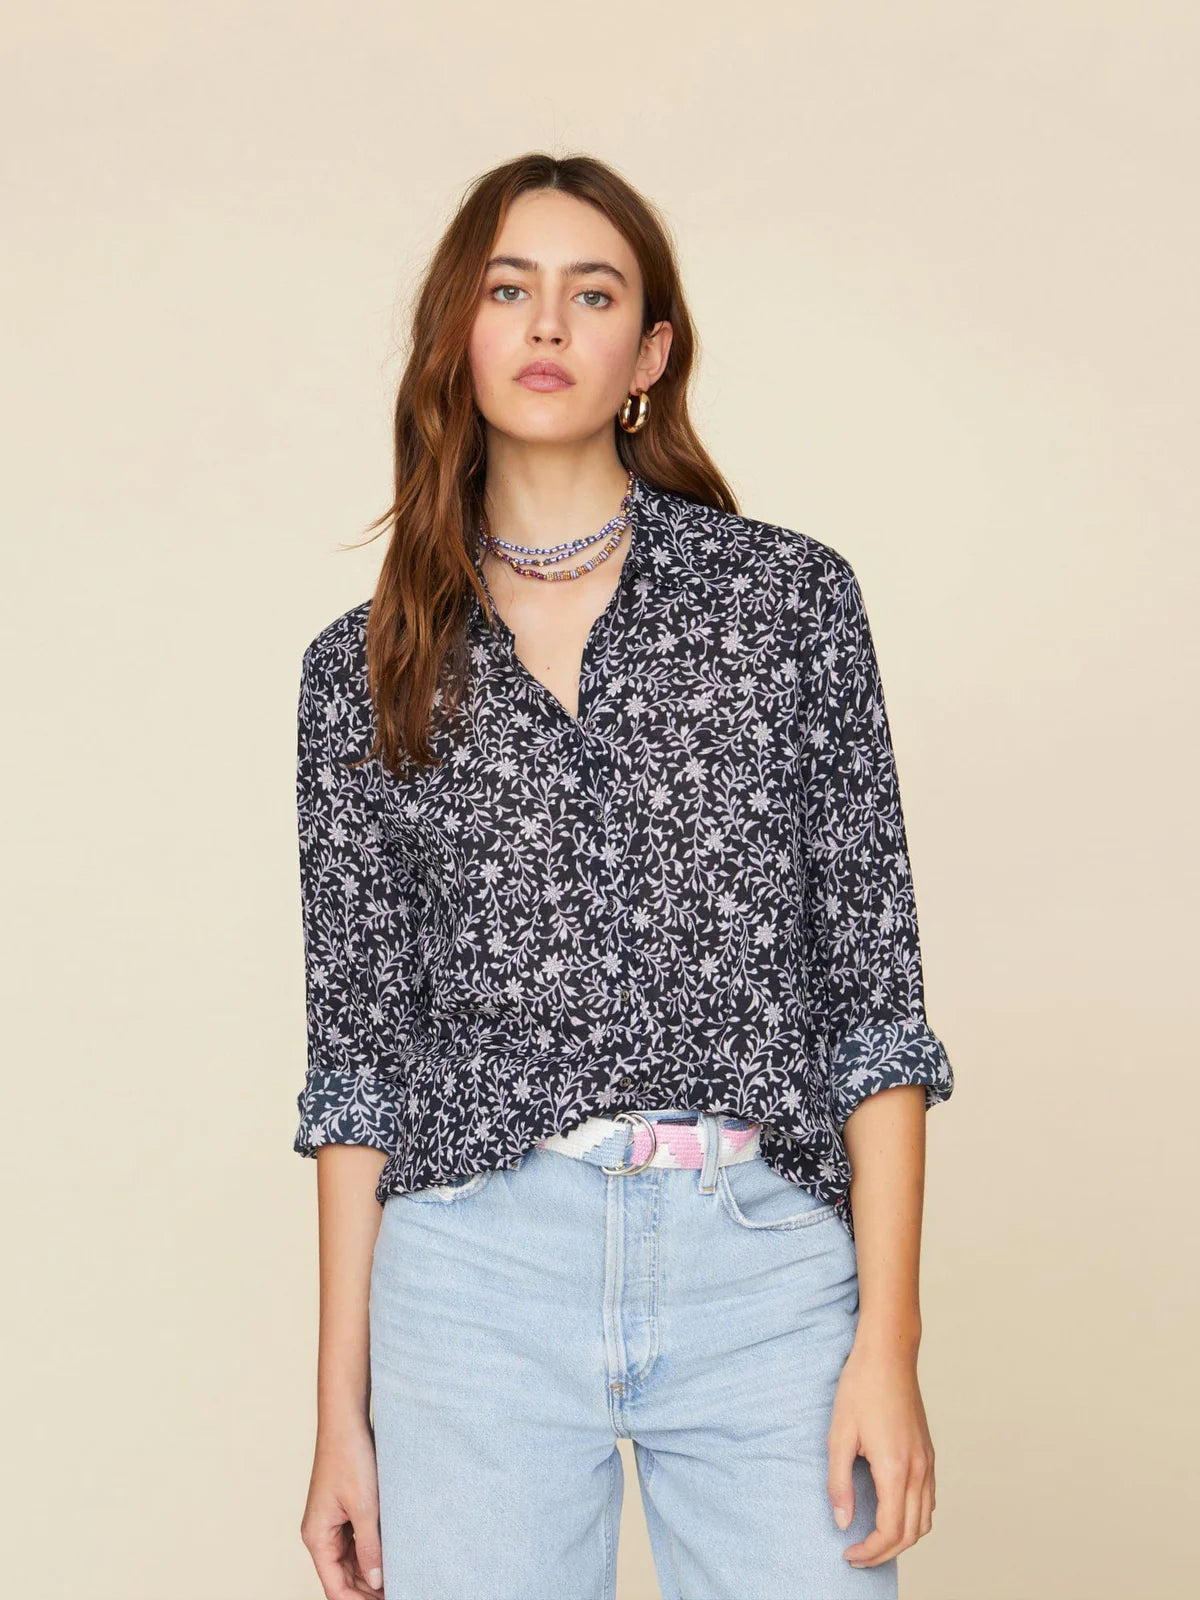 Xirena Beau Shirt |MULTIPLE COLORS|